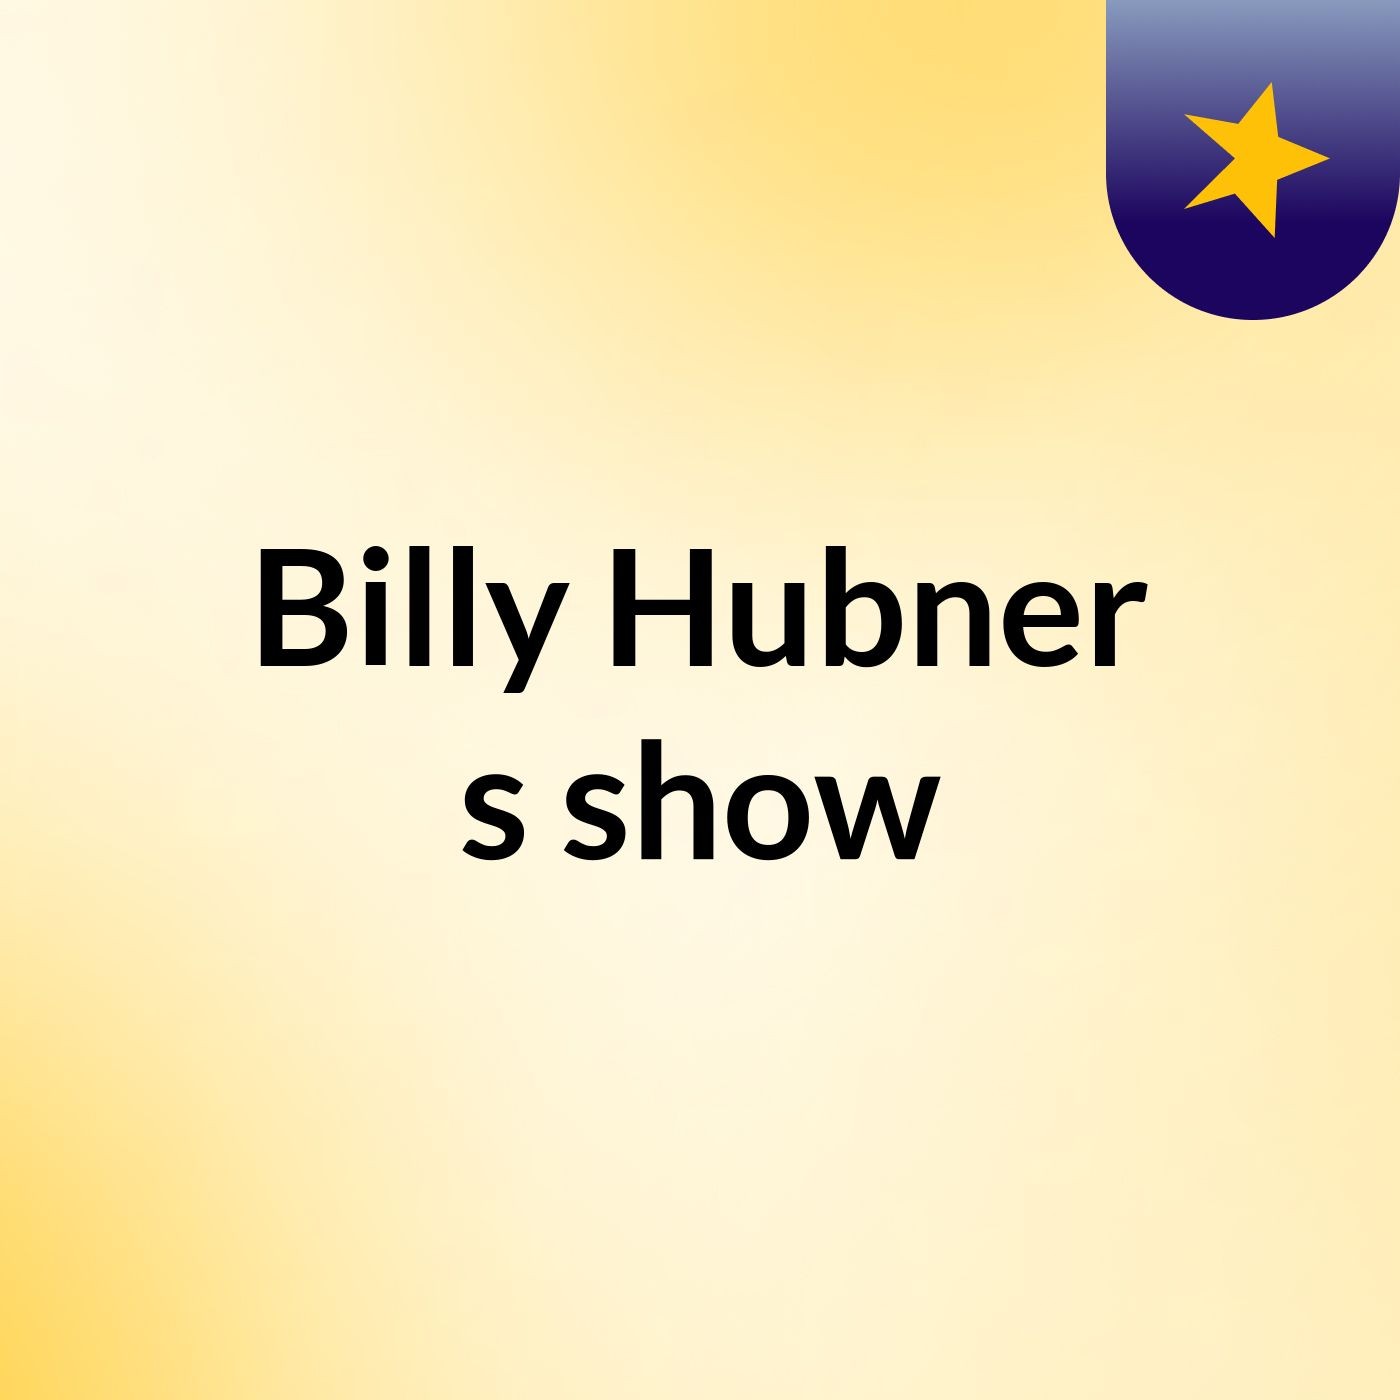 Episode 3 - Billy Hubner's show